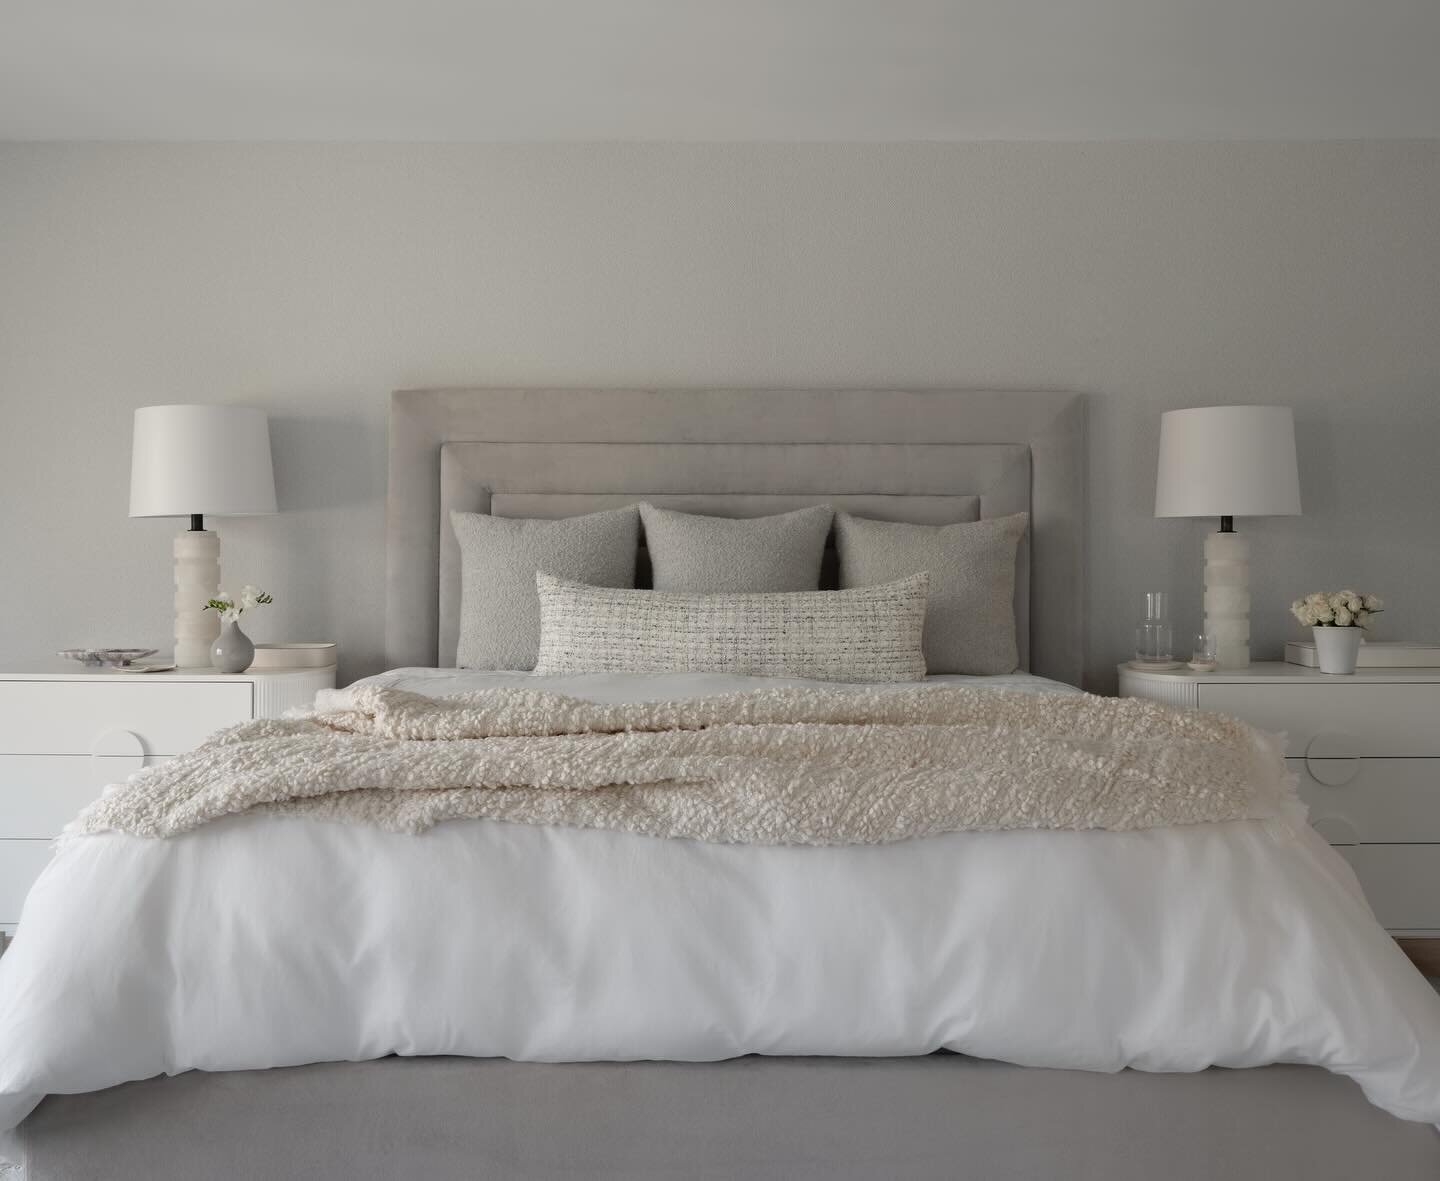 Serene primary bedroom 🩶 #sarahtractinteriors 

Photo @reidrolls.interiors 
Styling @deirdrekingcreative